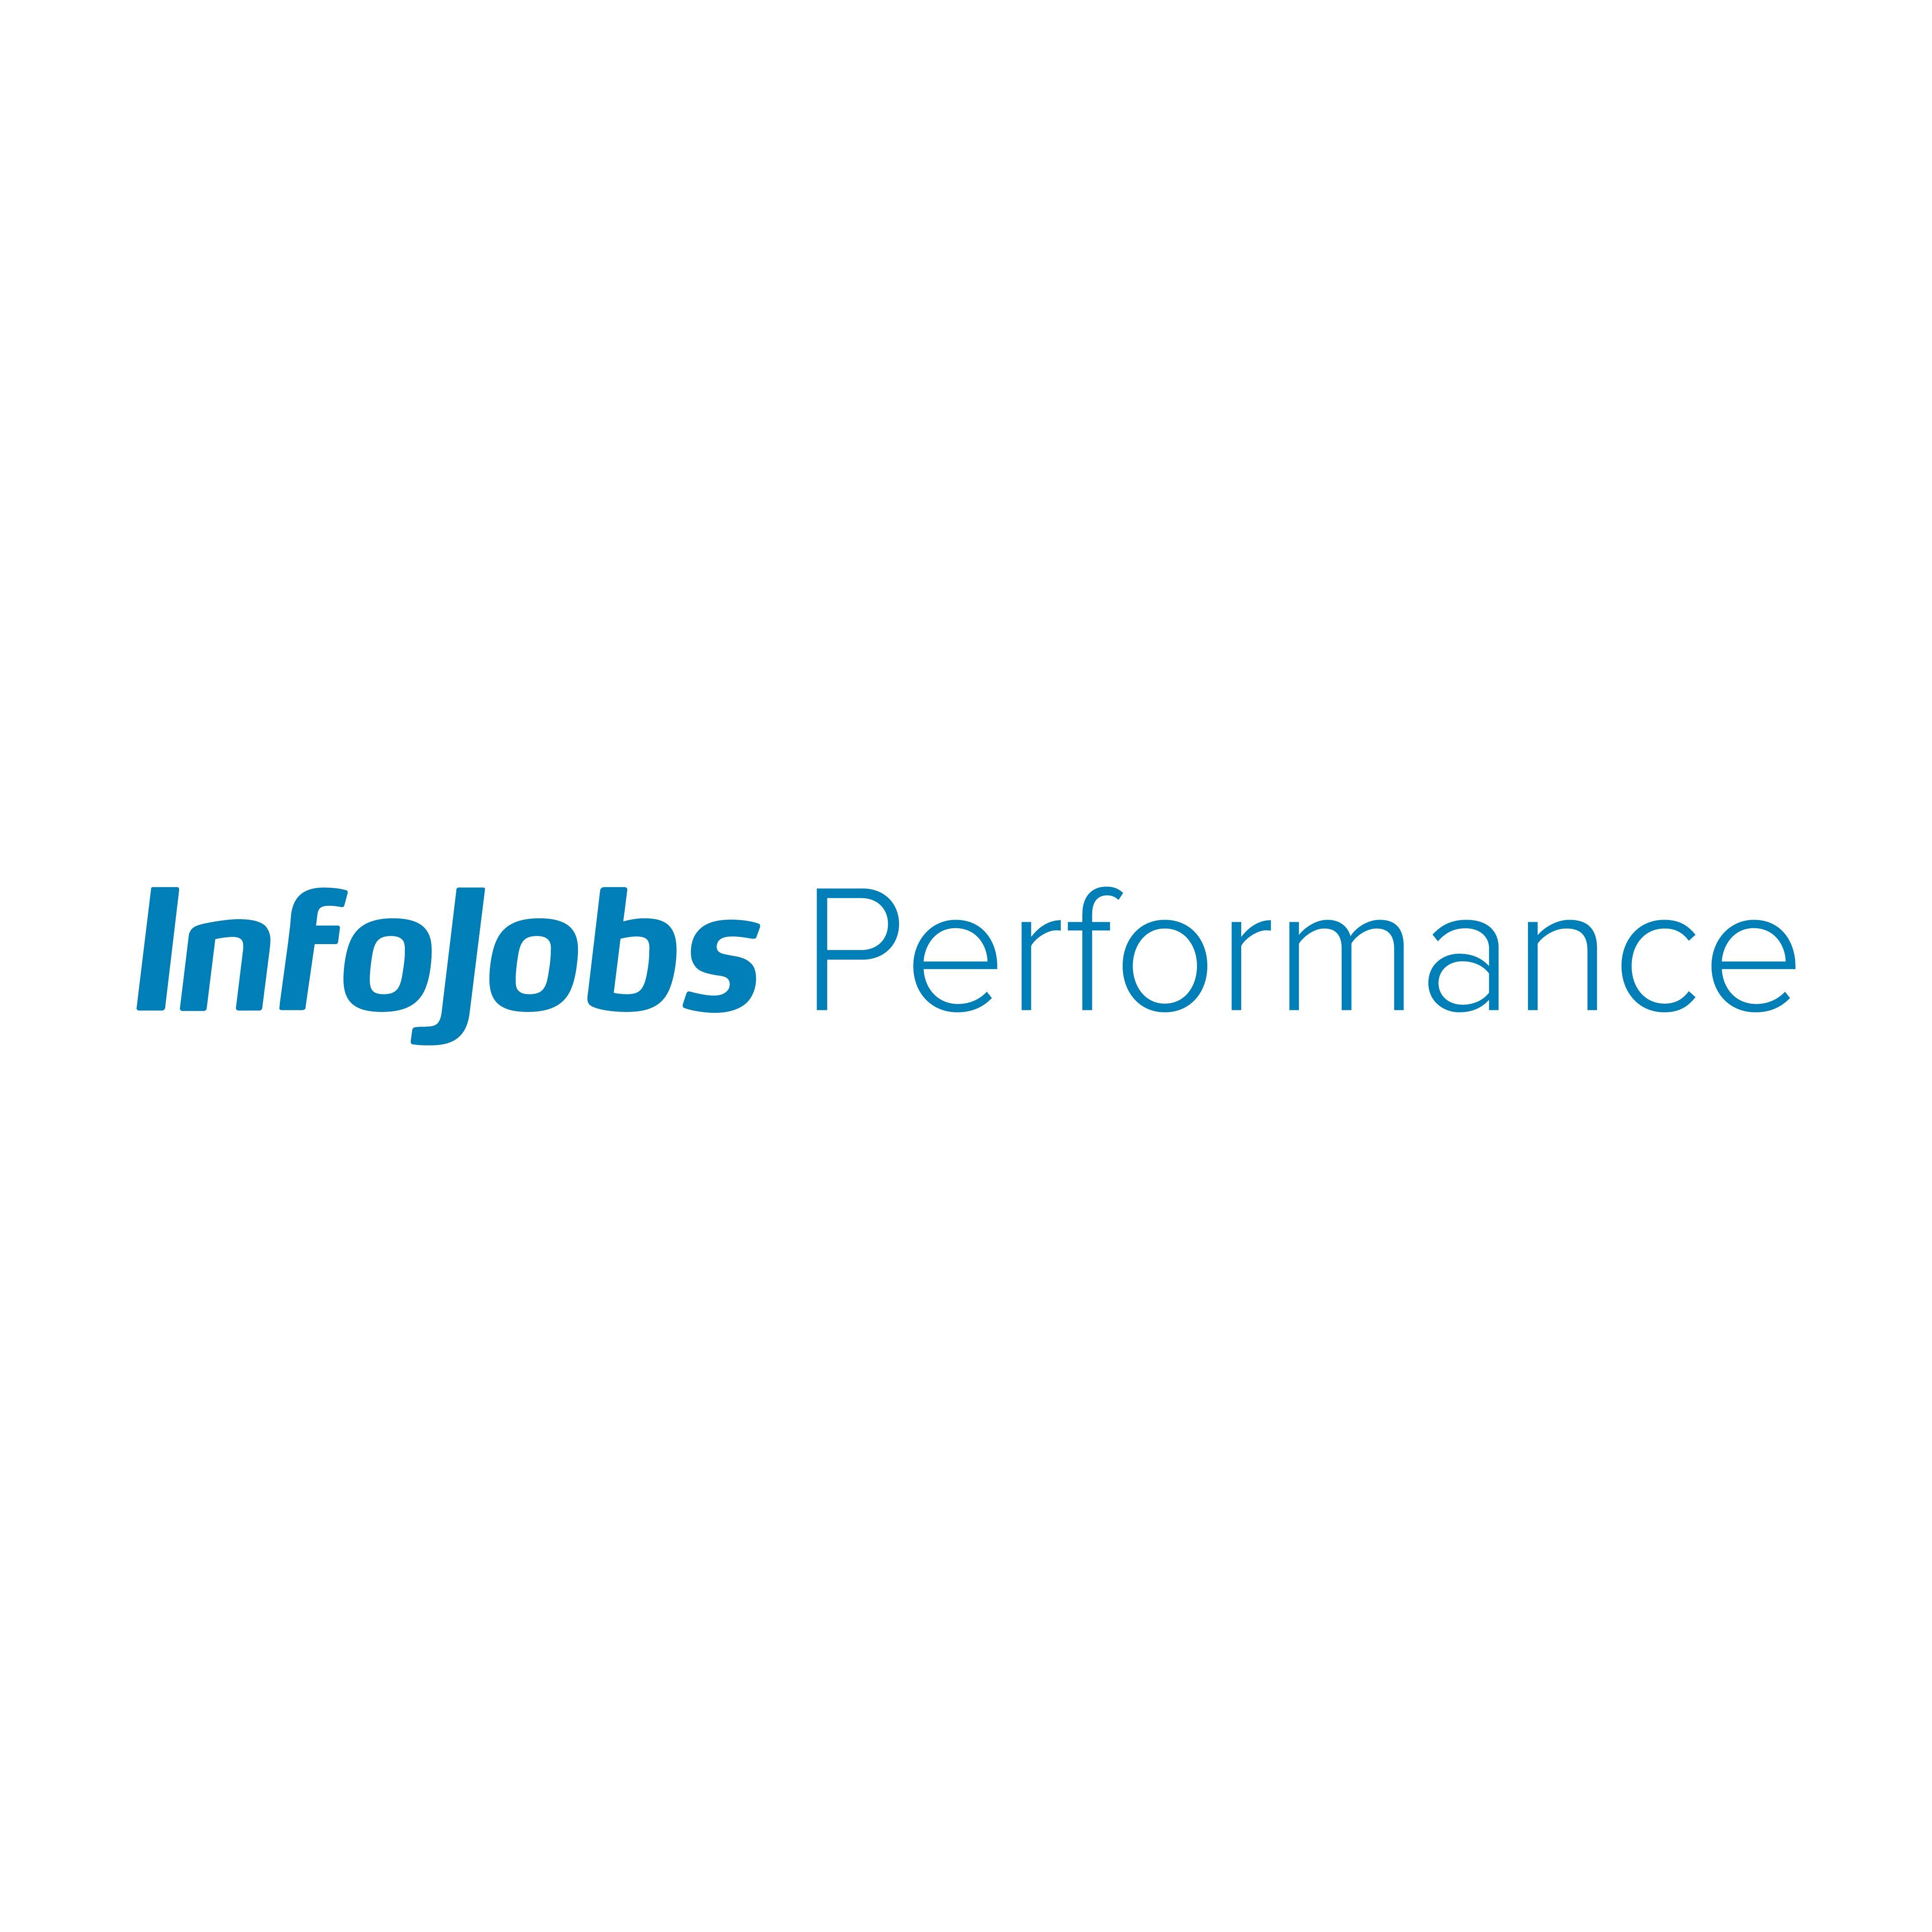 InfoJobs Performance